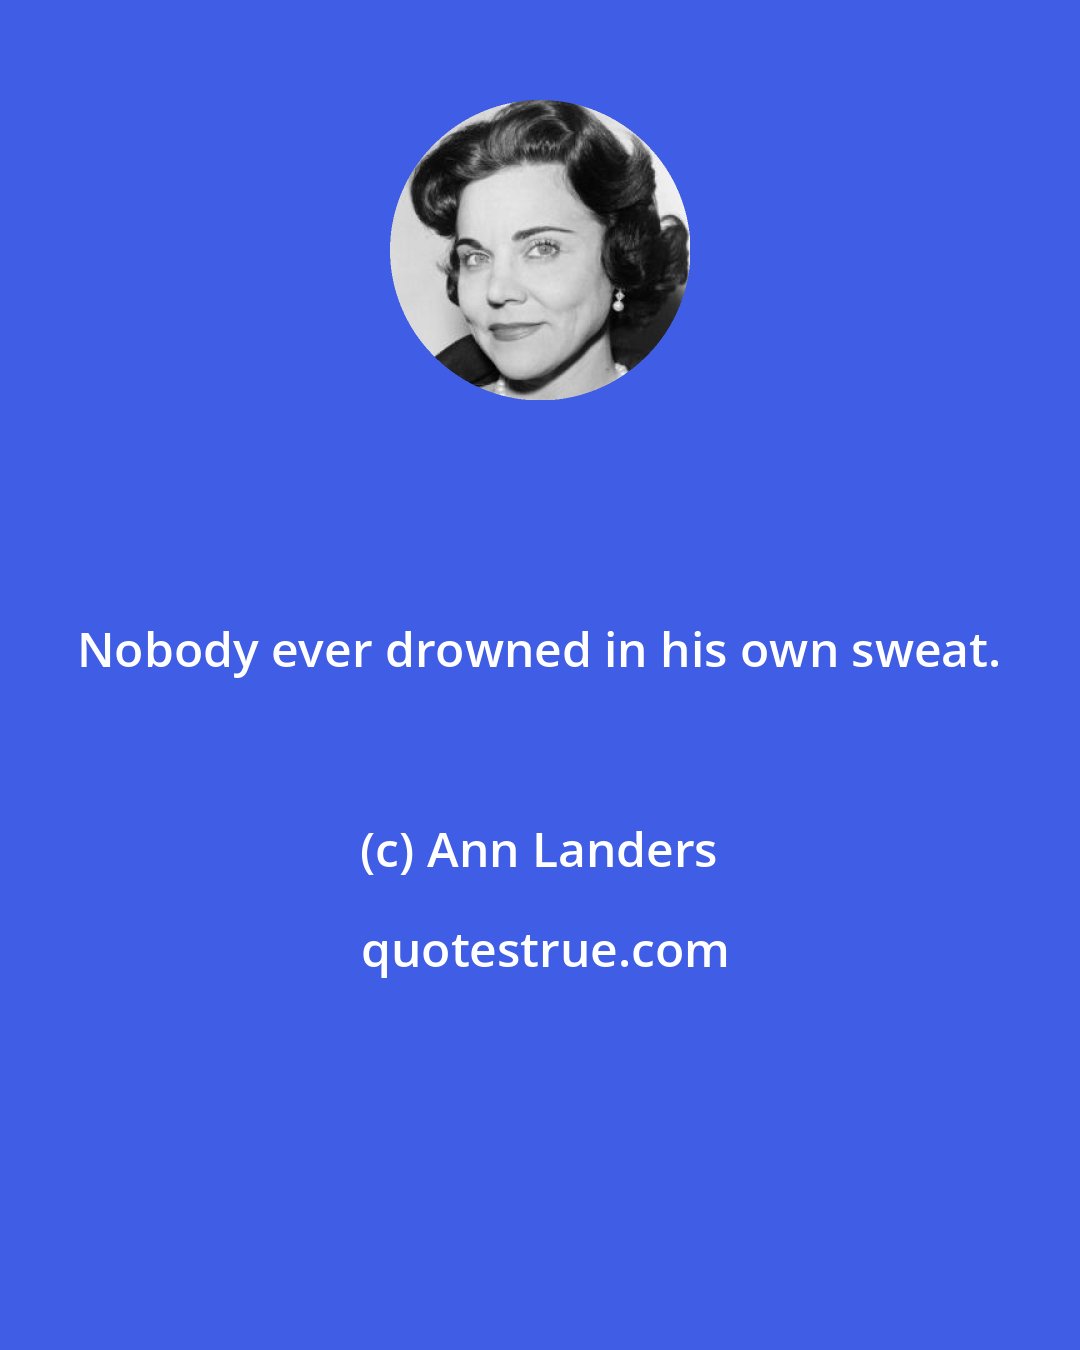 Ann Landers: Nobody ever drowned in his own sweat.